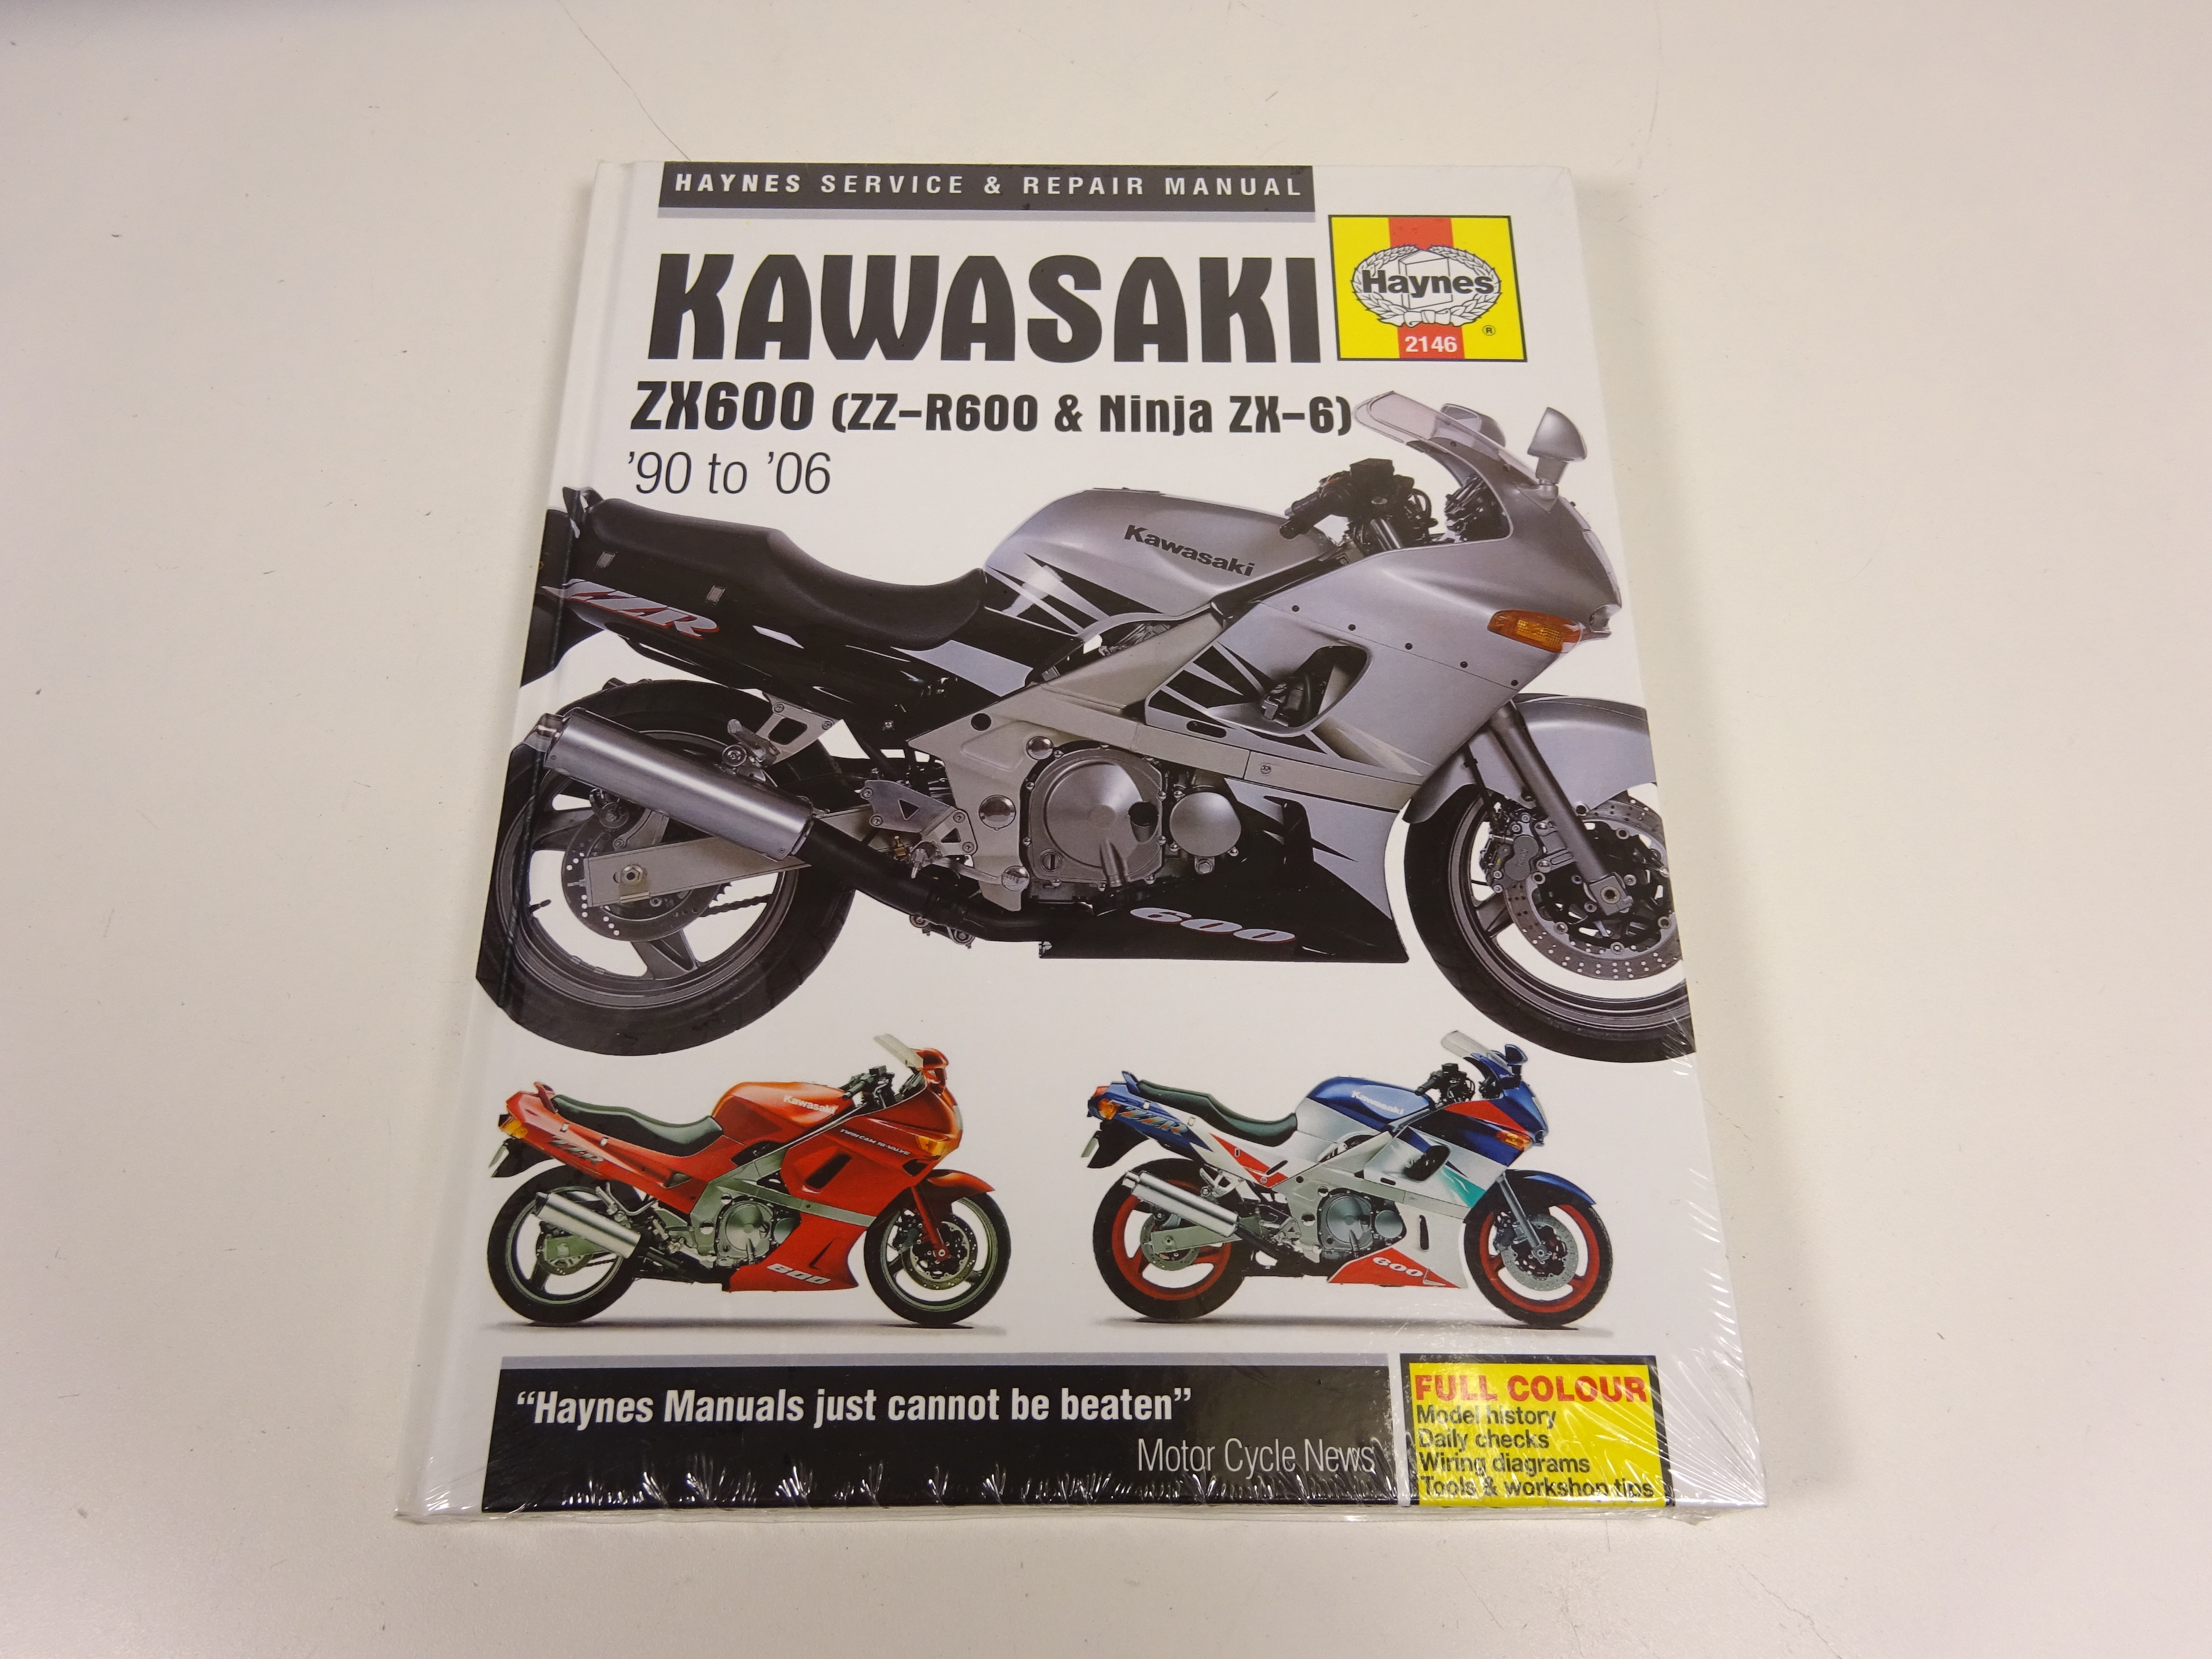 Мануалы и документация для Kawasaki ZZR 400 и ZZR 600